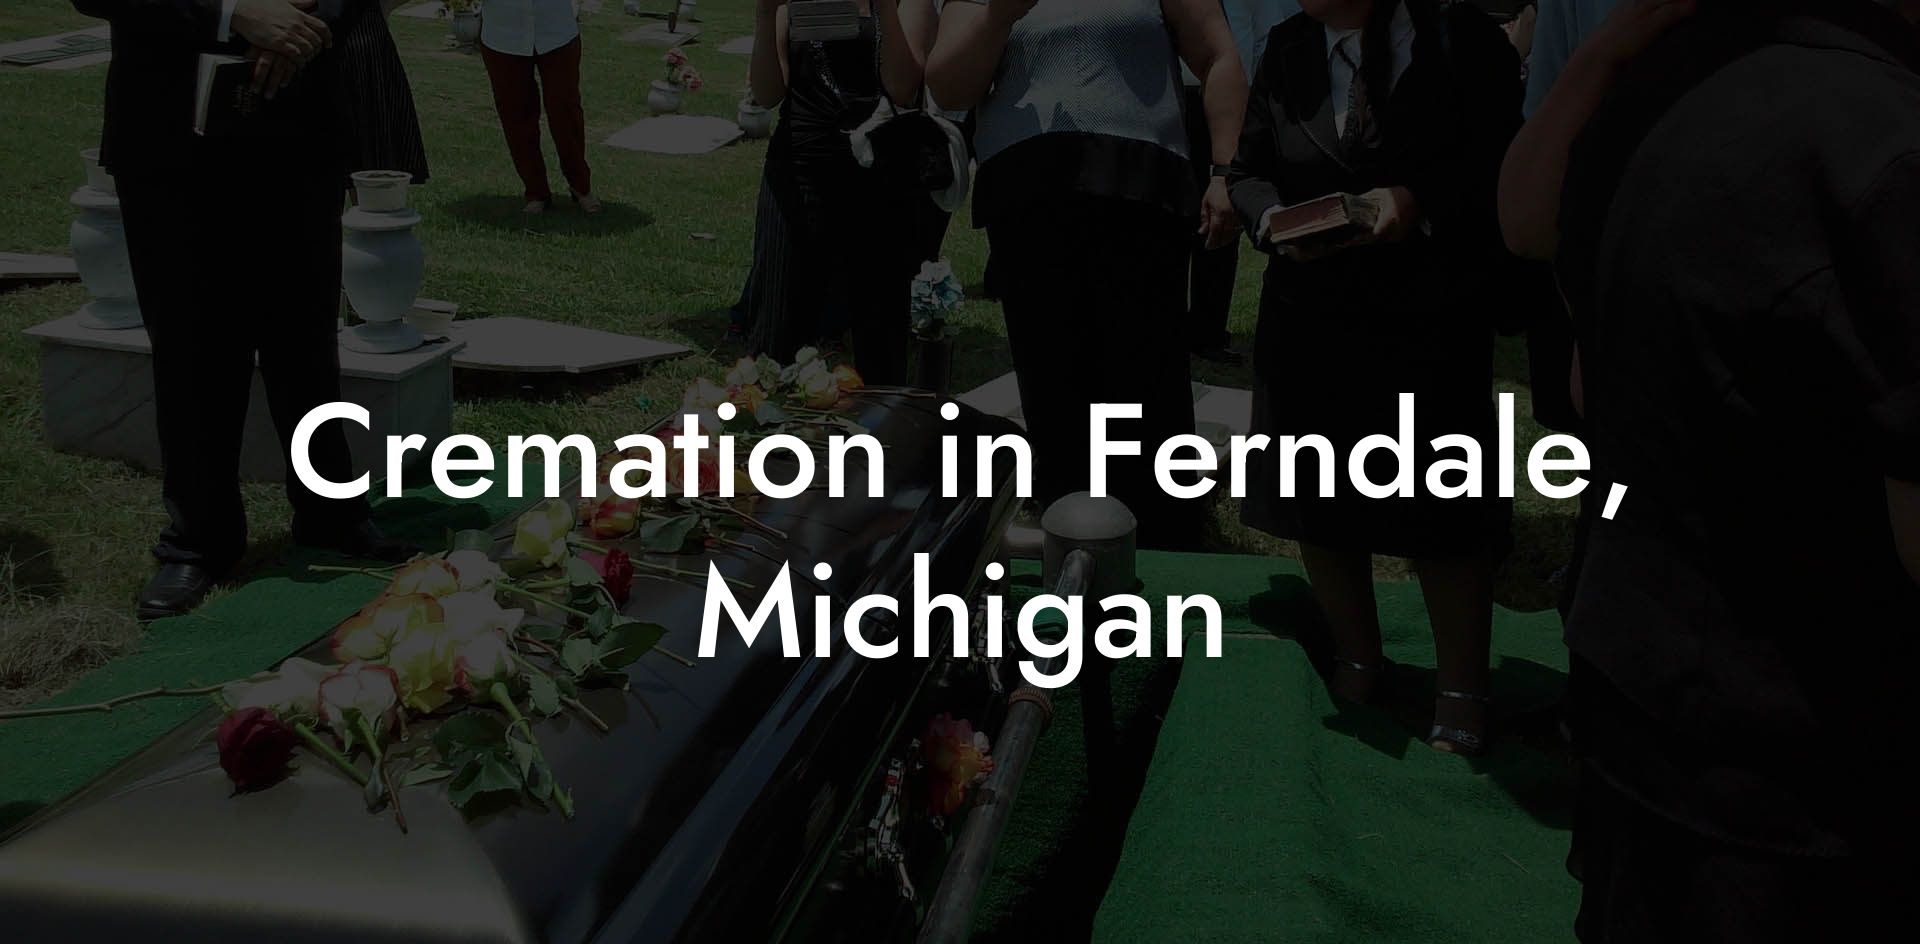 Cremation in Ferndale, Michigan